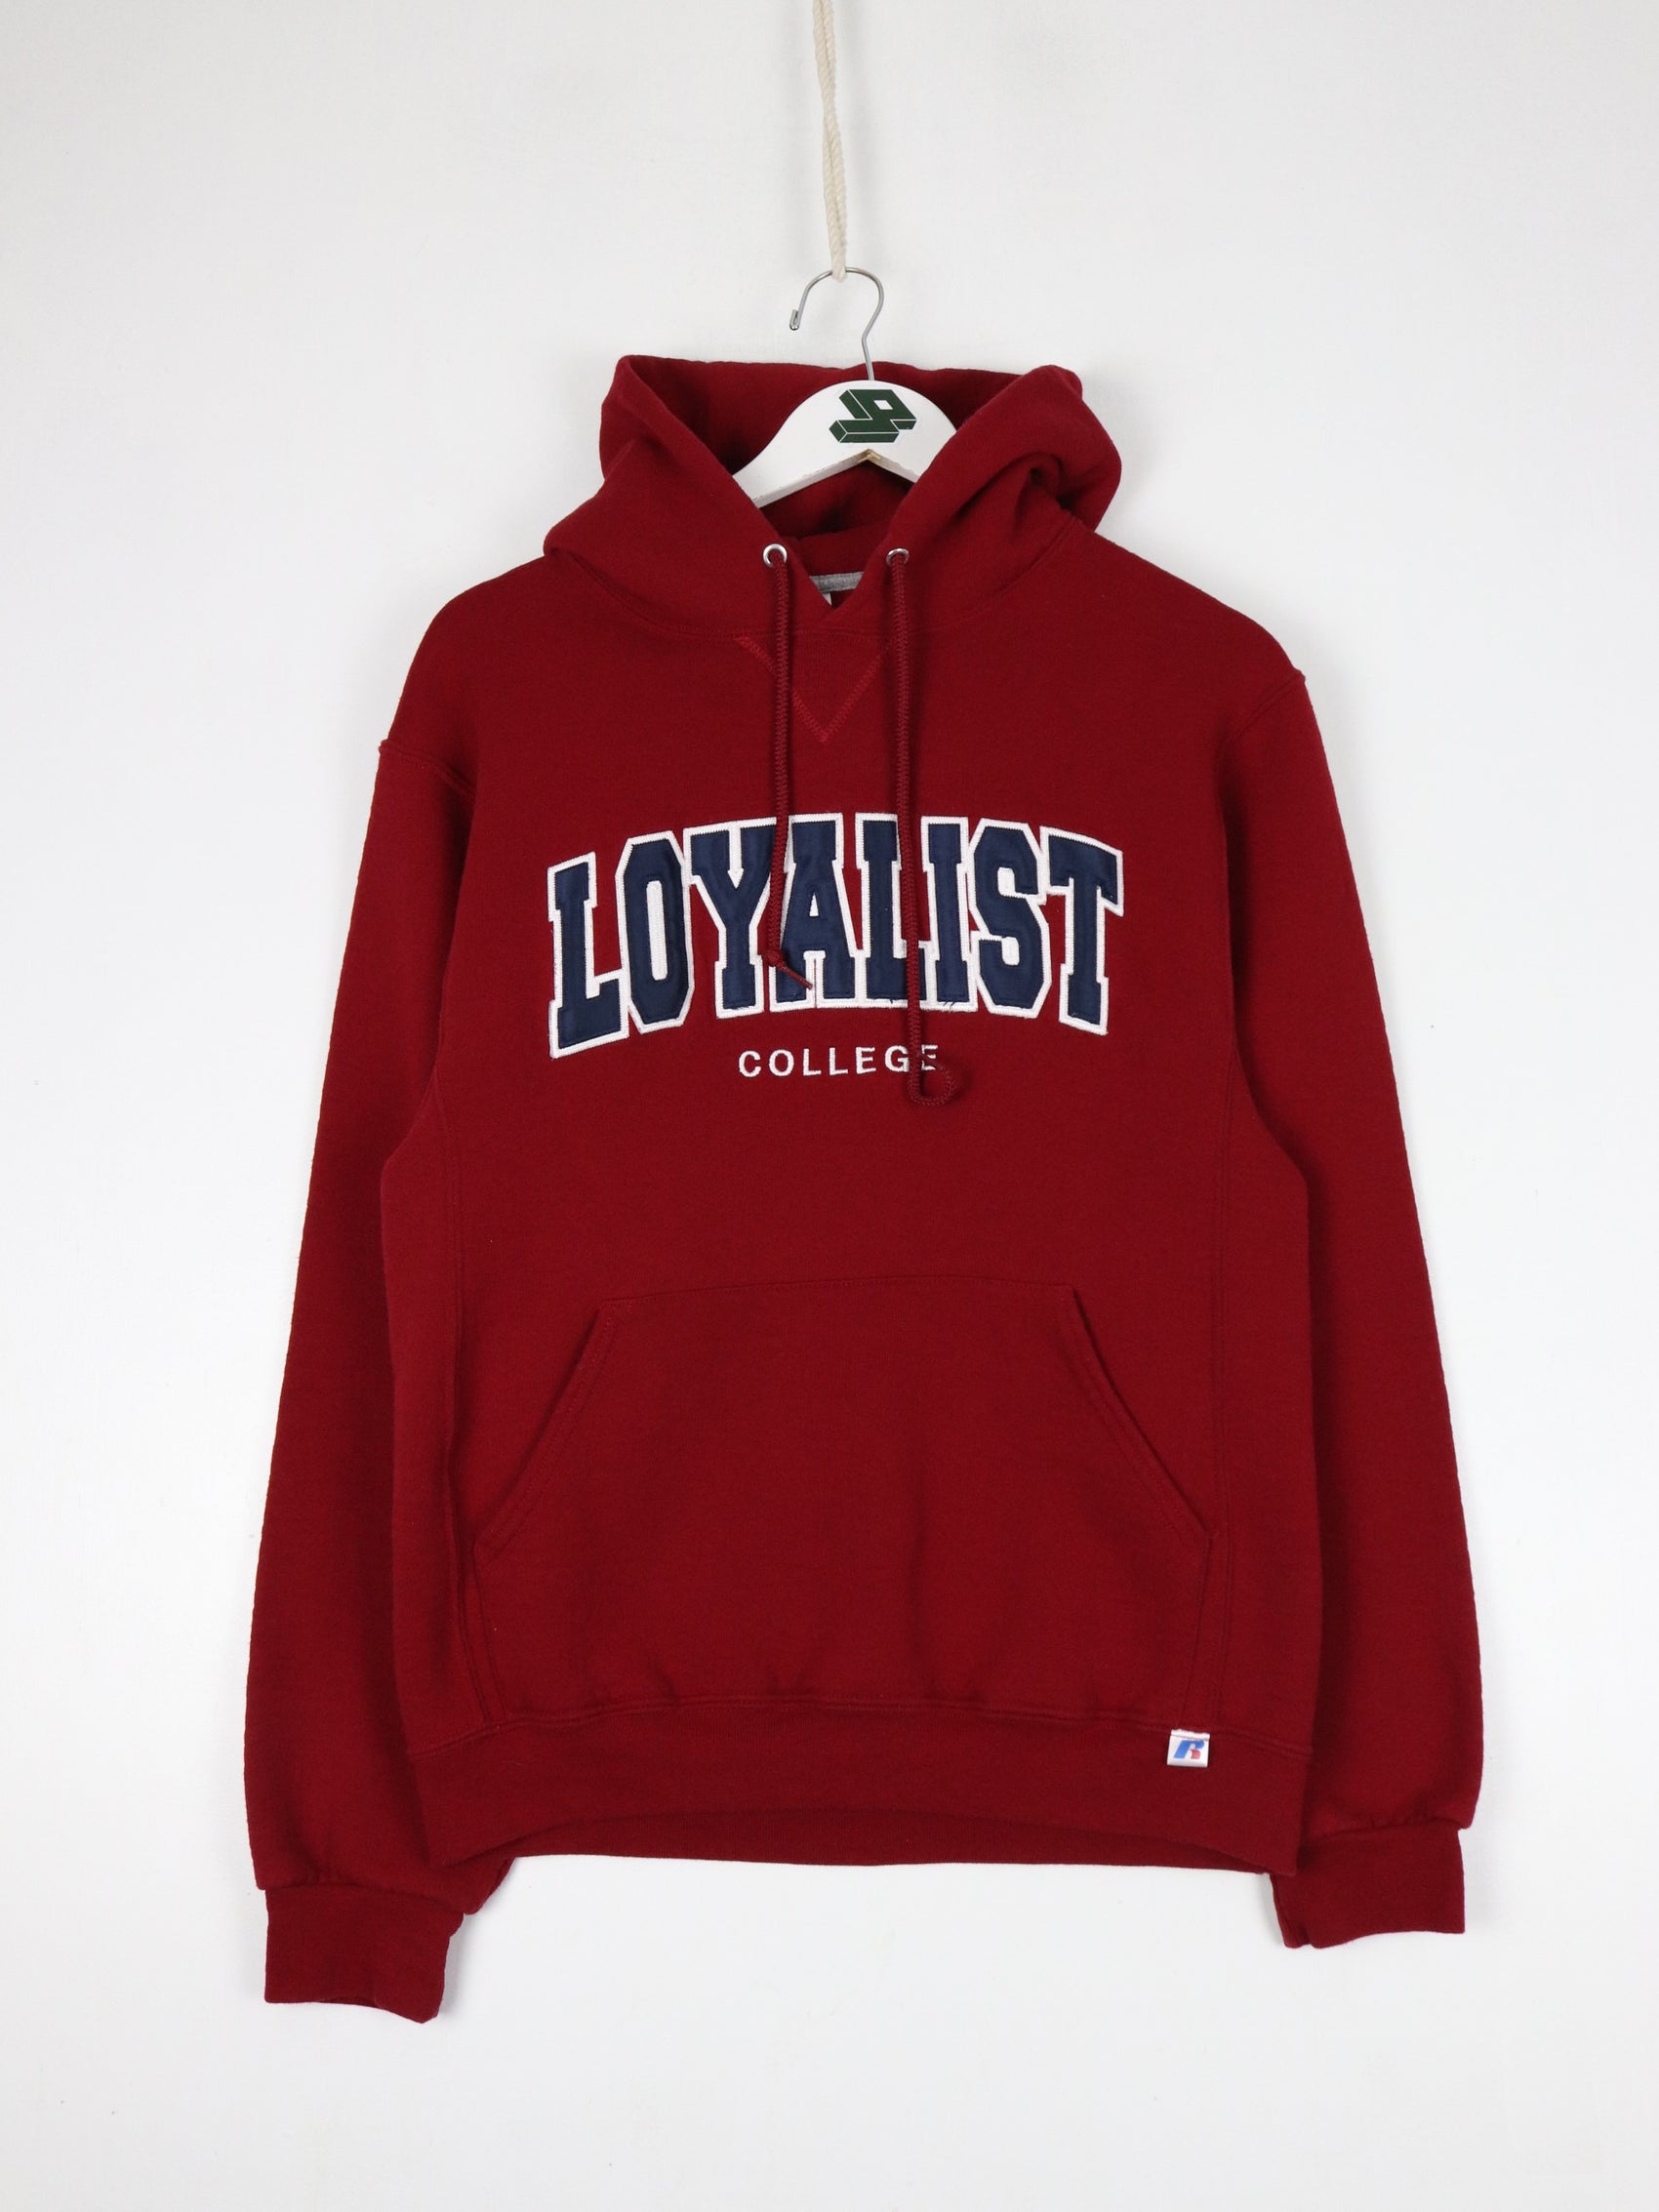 Loyalist College Sweatshirt Mens Small Red Russell Athletic Hoodie